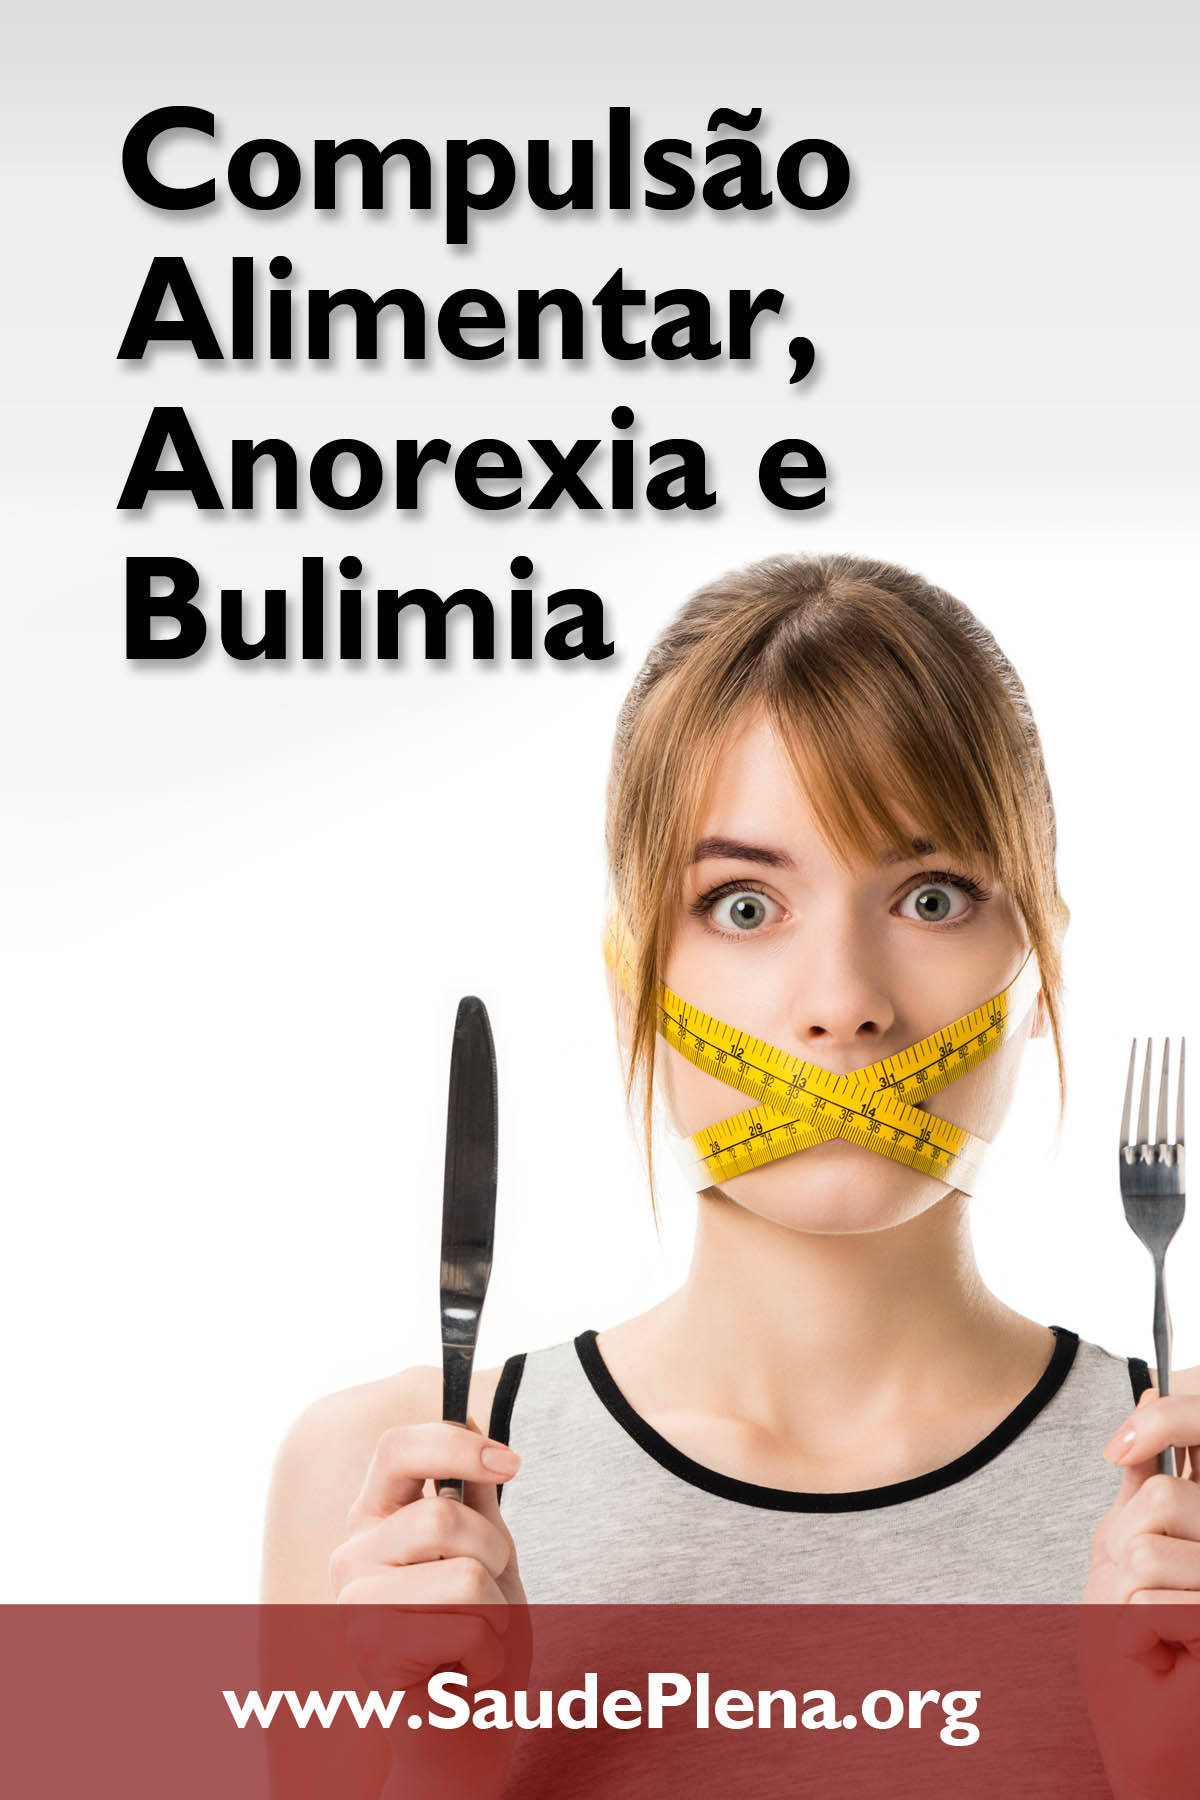 Compulsão Alimentar, Anorexia e Bulimia